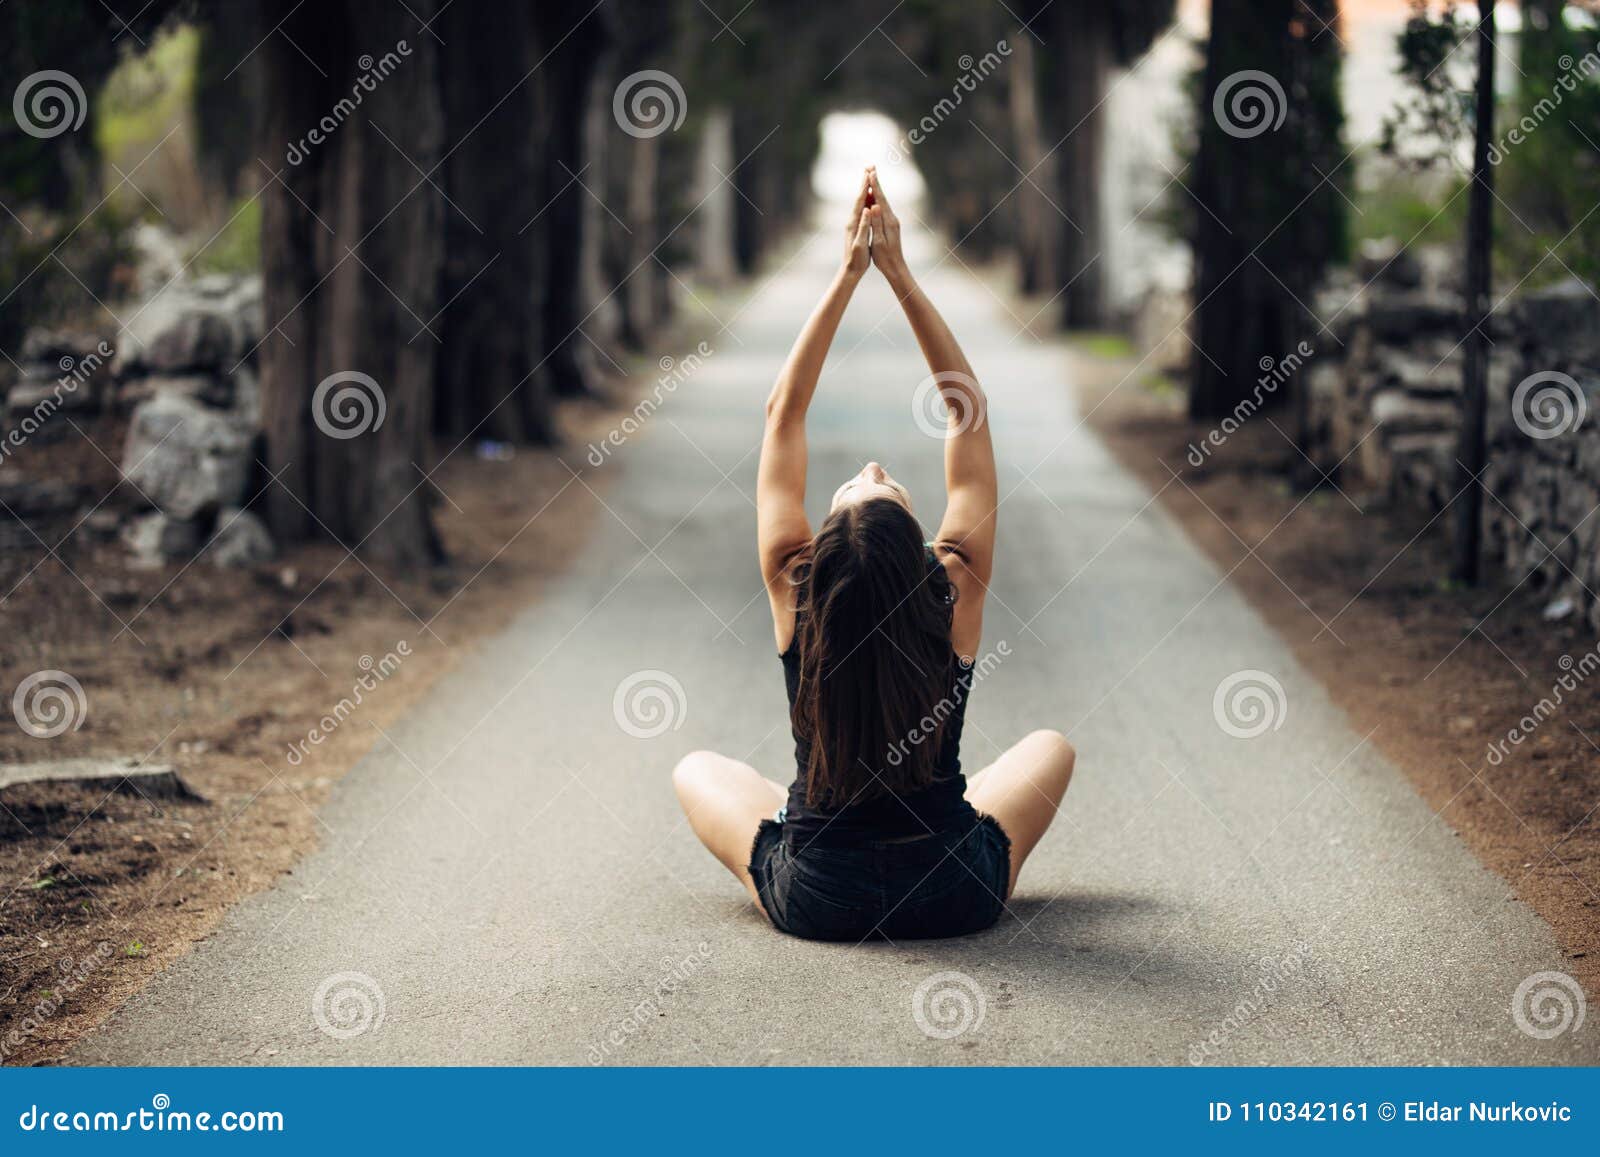 carefree calm woman meditating in nature.finding inner peace.yoga practice.spiritual healing lifestyle.enjoying peace,anti-stress